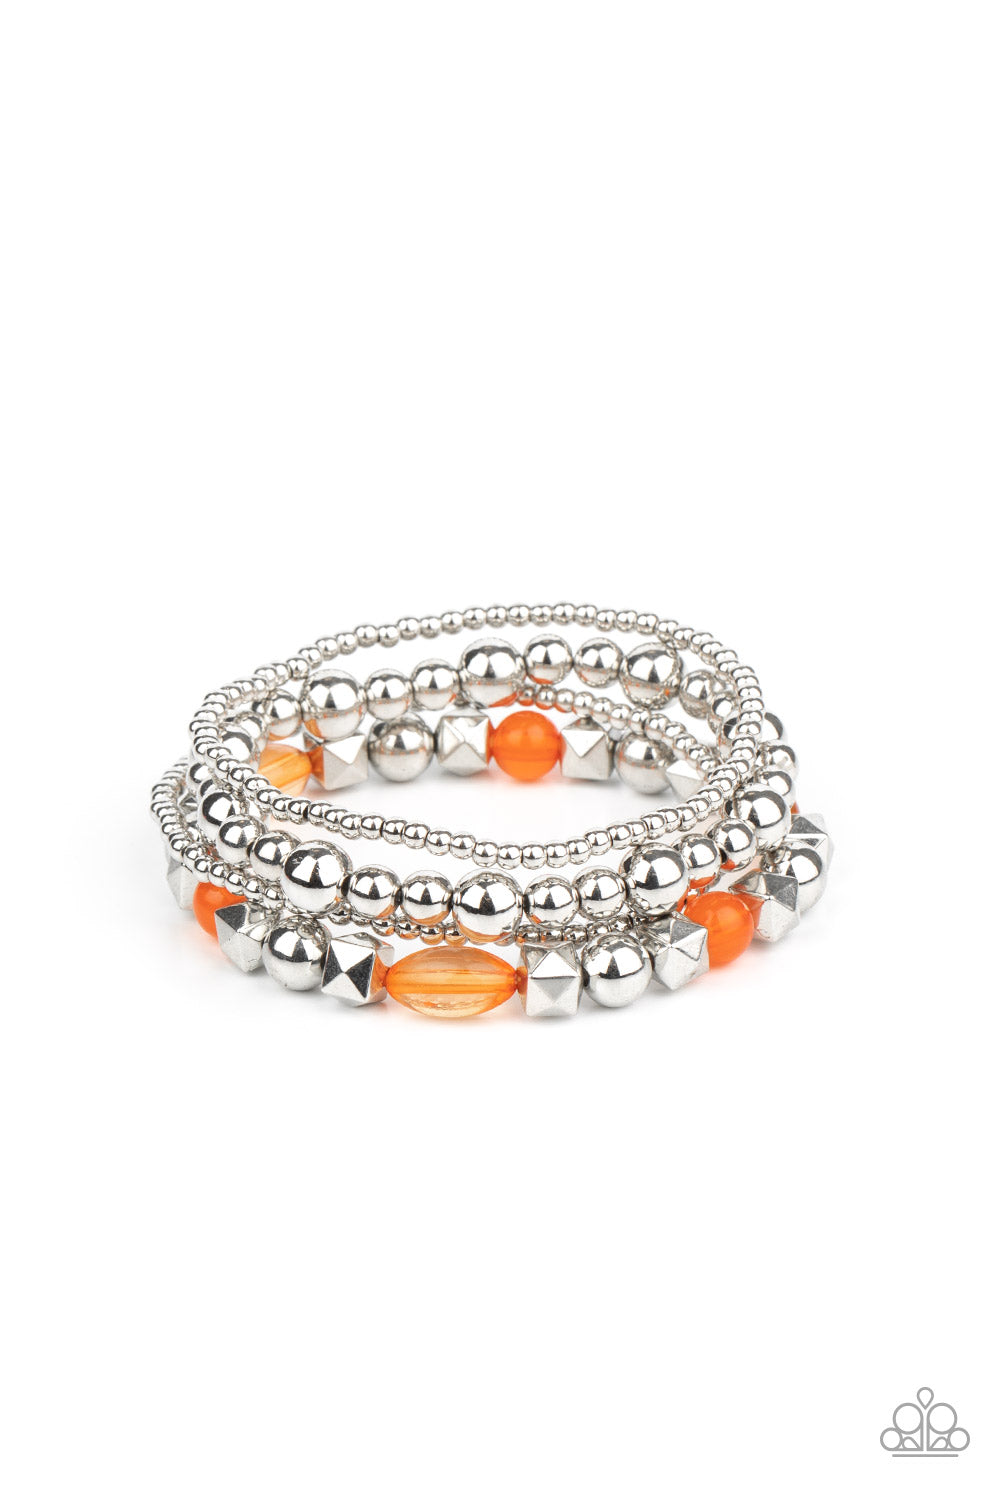 Paparazzi Babe-alicious Orange Stretch Bracelet